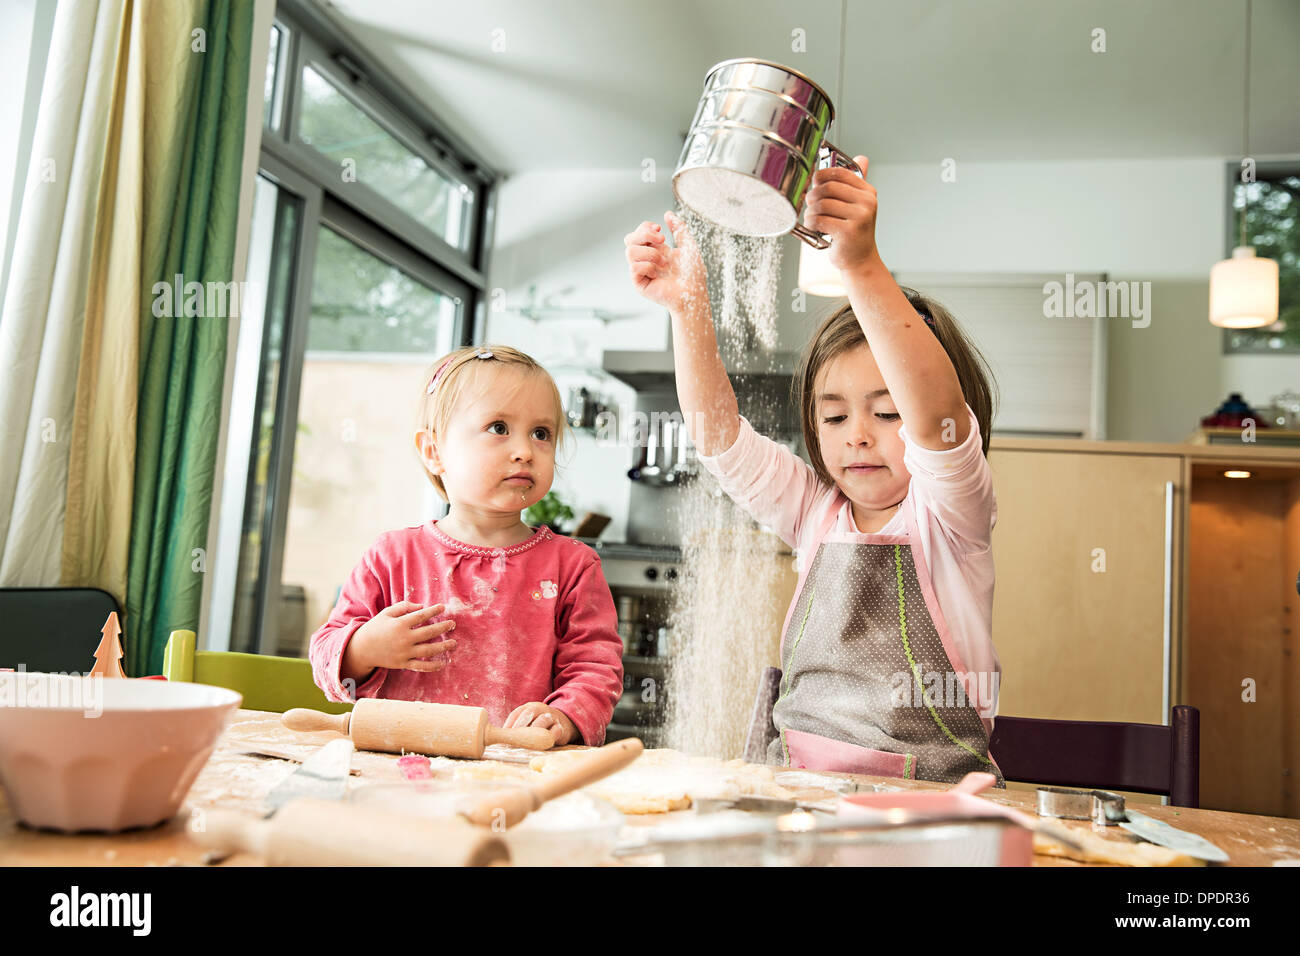 Girl sieving flour in kitchen Stock Photo